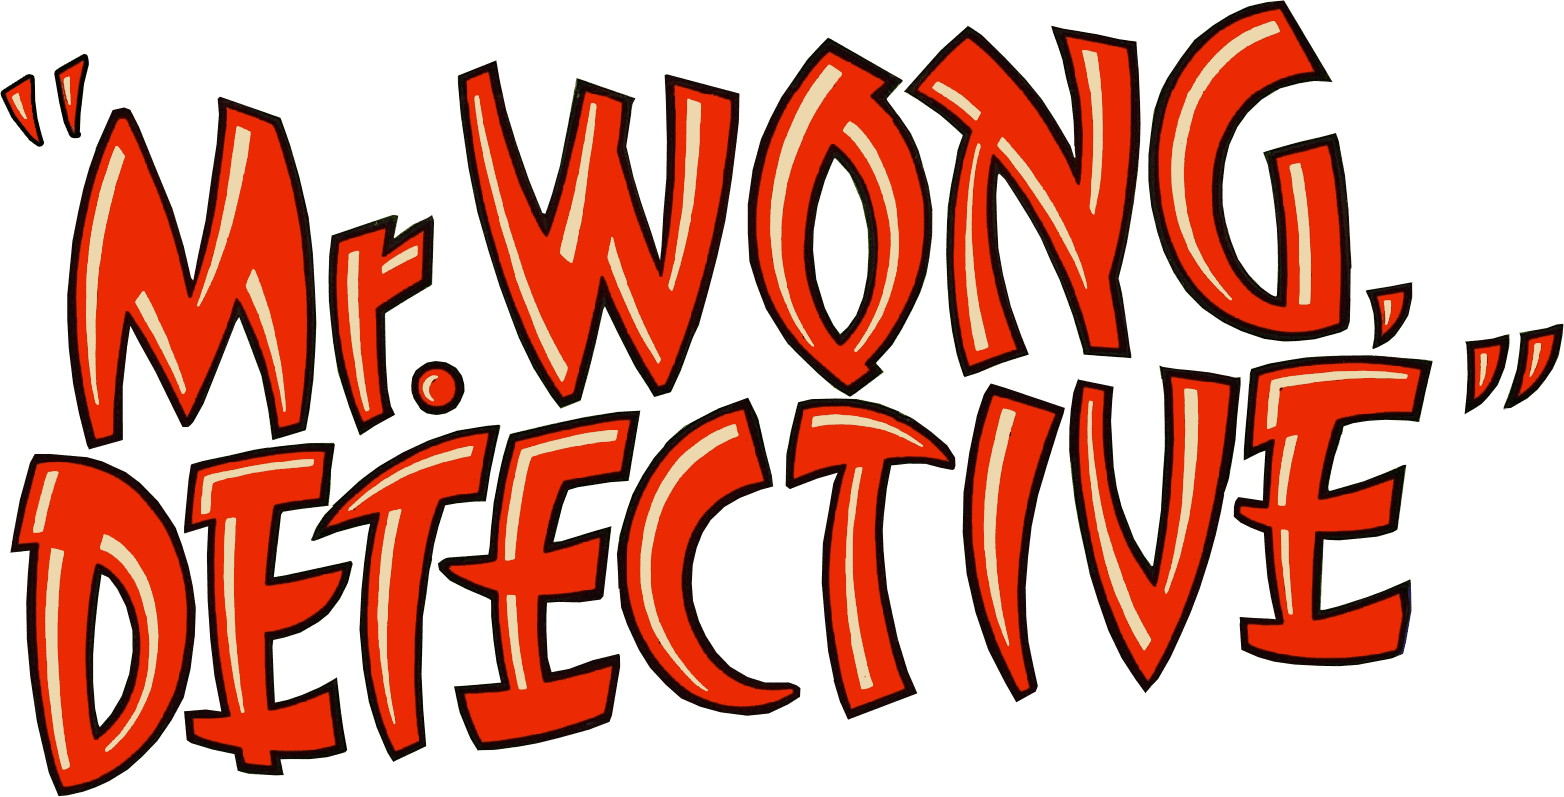 Mr. Wong, Detective logo